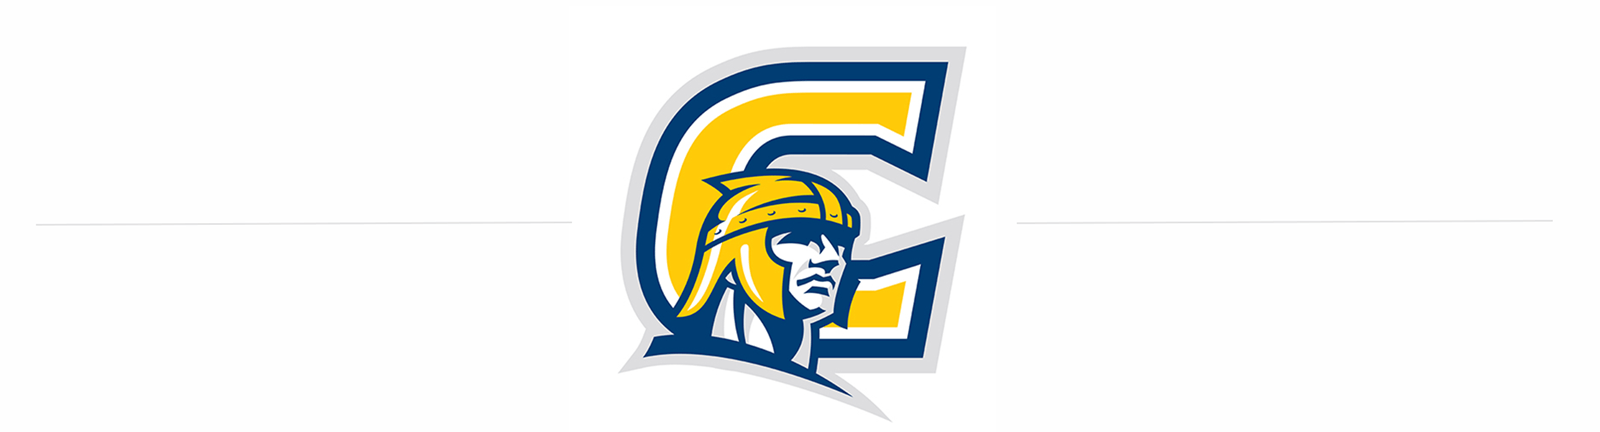 Corban Logo - Why Expand - Corban University Athletics